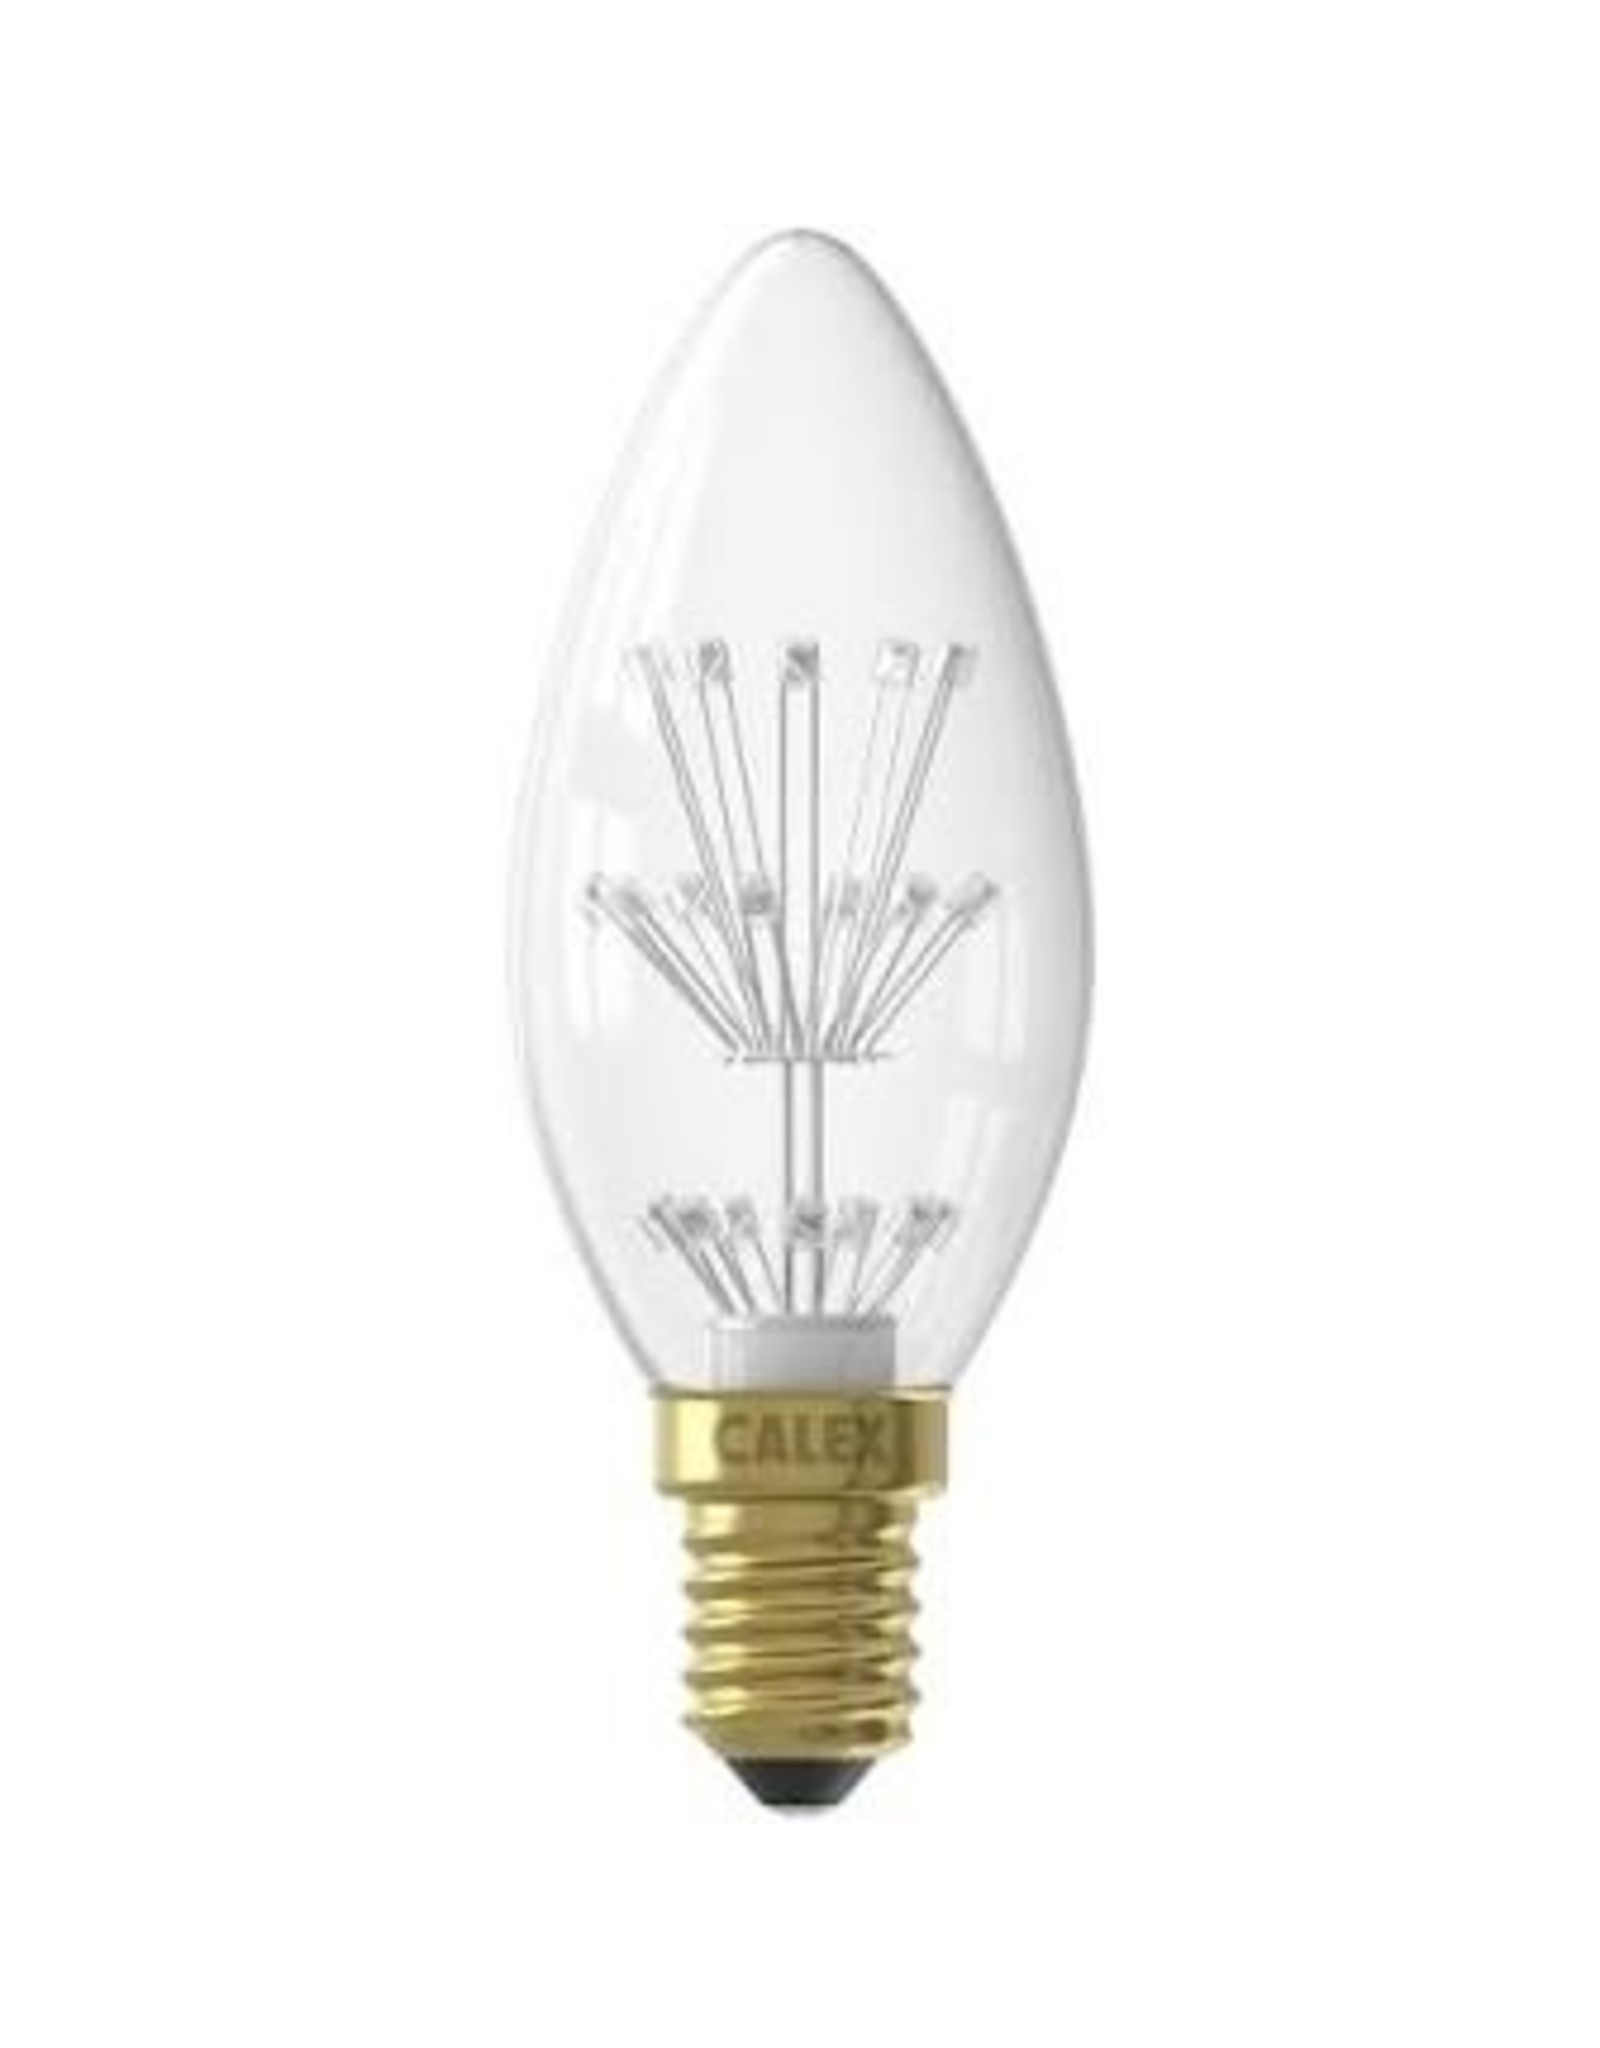 Calex Pearl LED Kaarslamp 220-240V 1,0W E14 B35, 20-leds 1800K